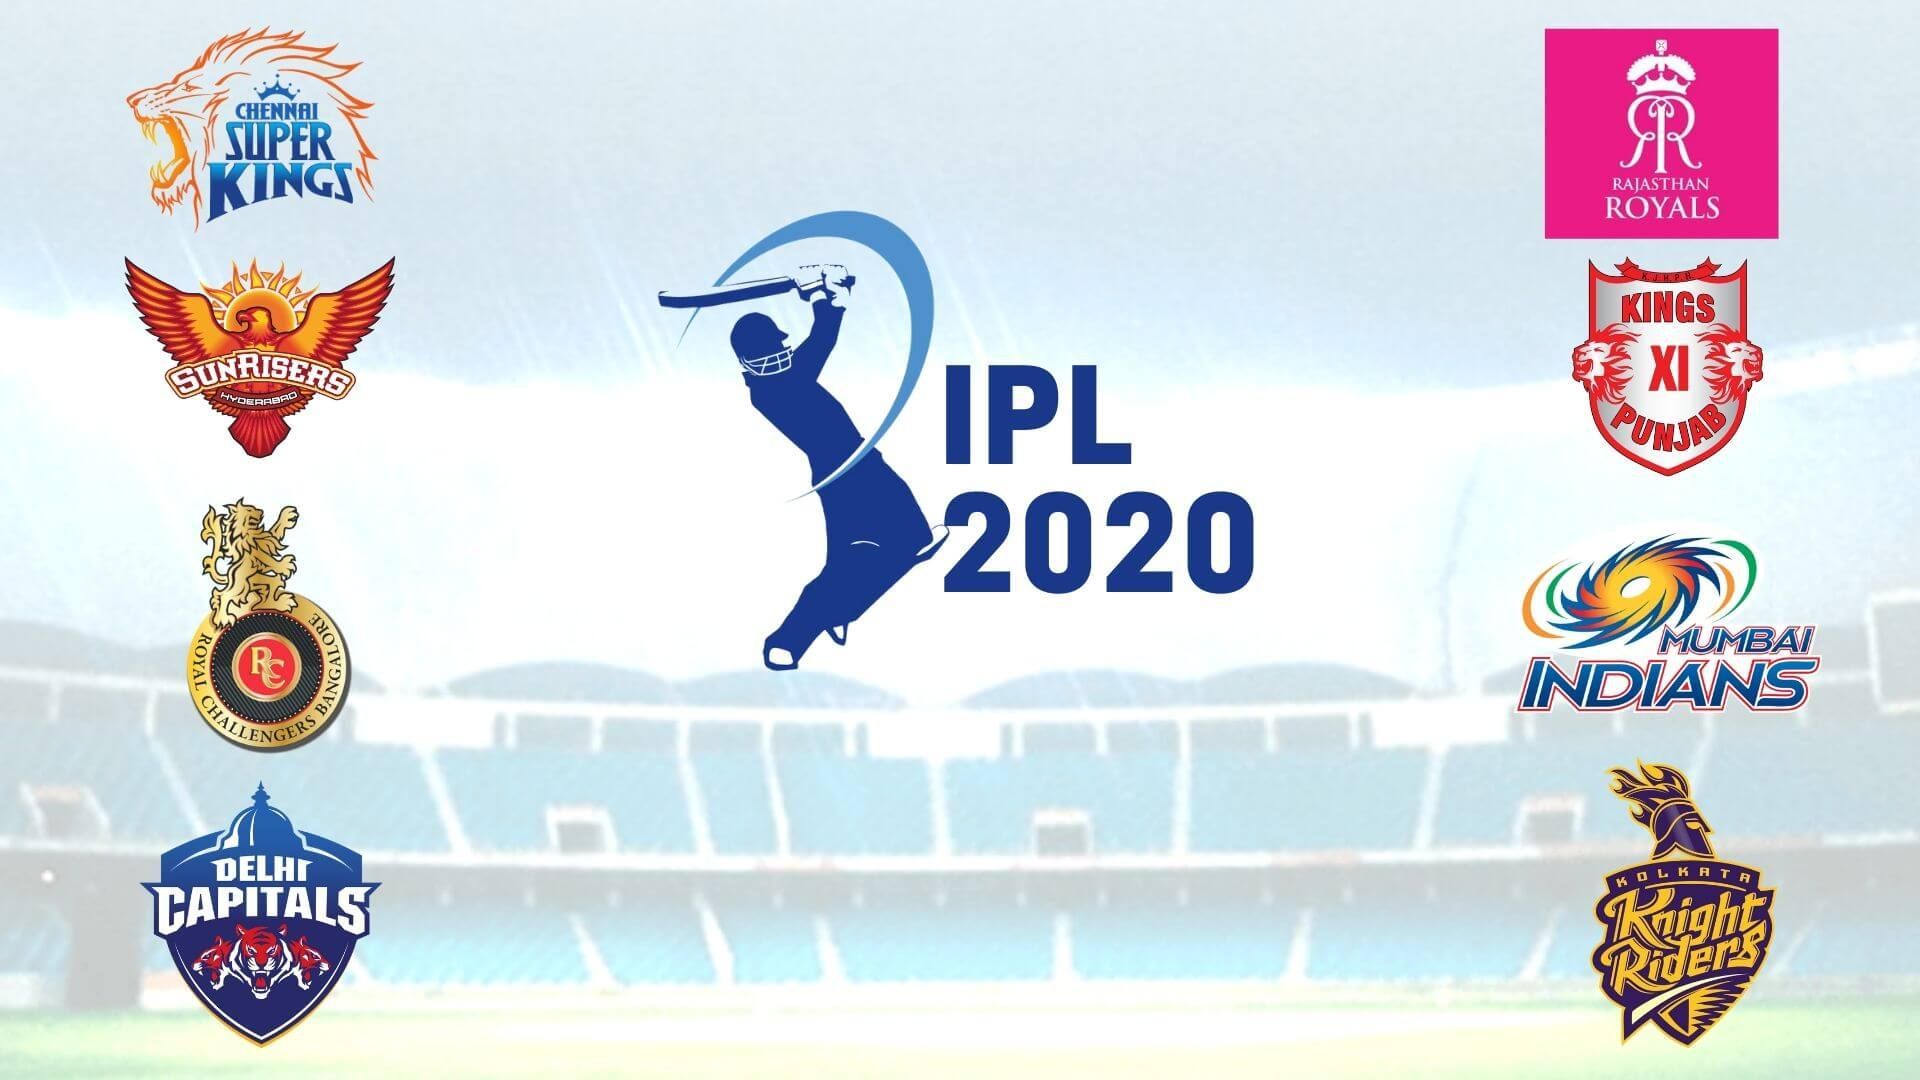 IPL 2020 Wallpapers - Wallpaper Cave